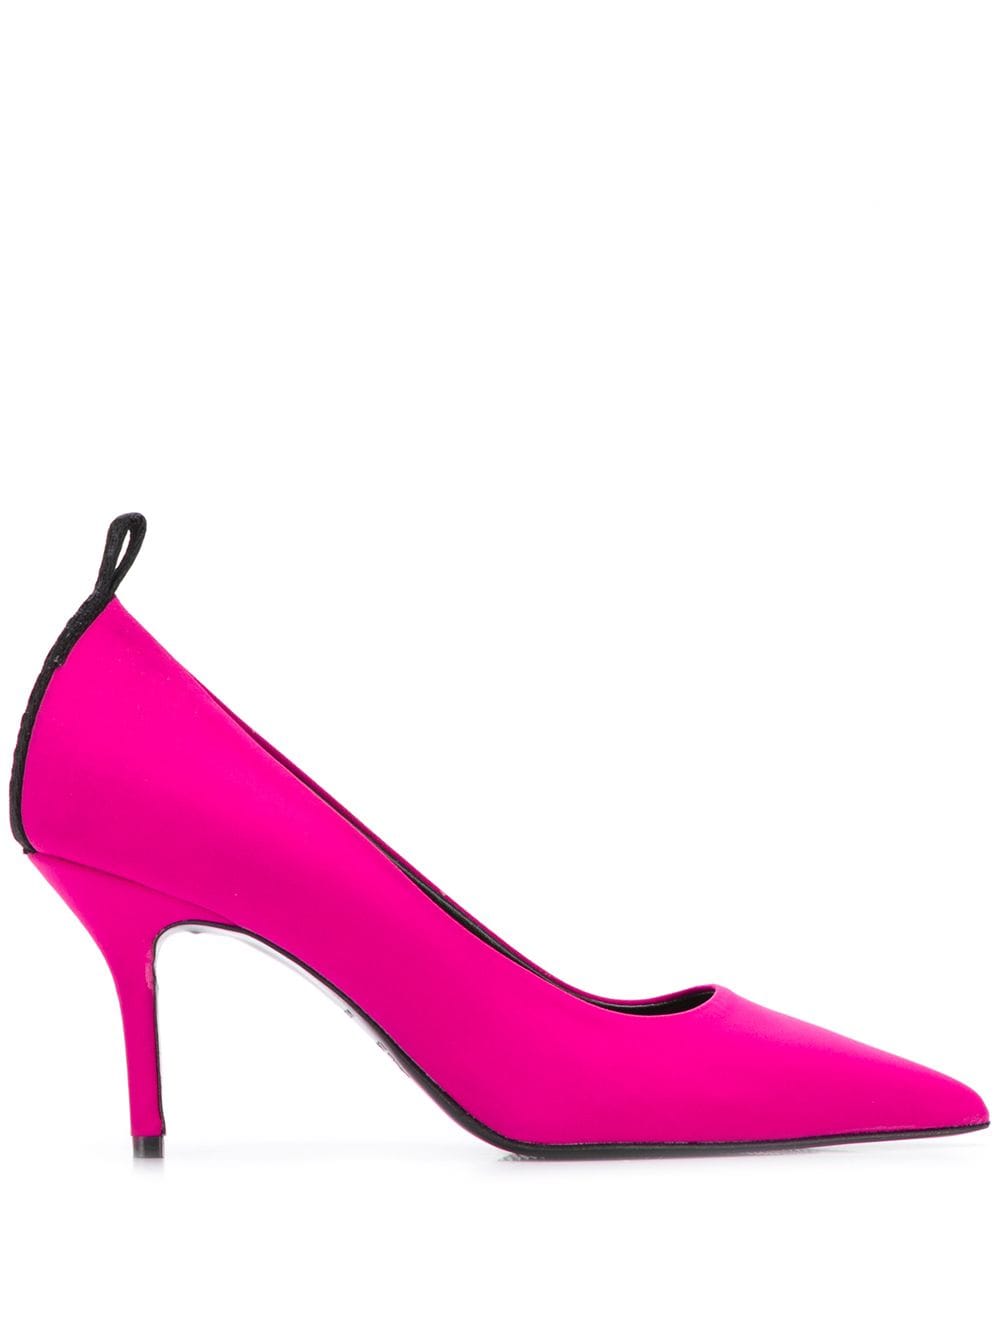 Karl Lagerfeld X Carine Roitfeld Satin Pumps In Pink